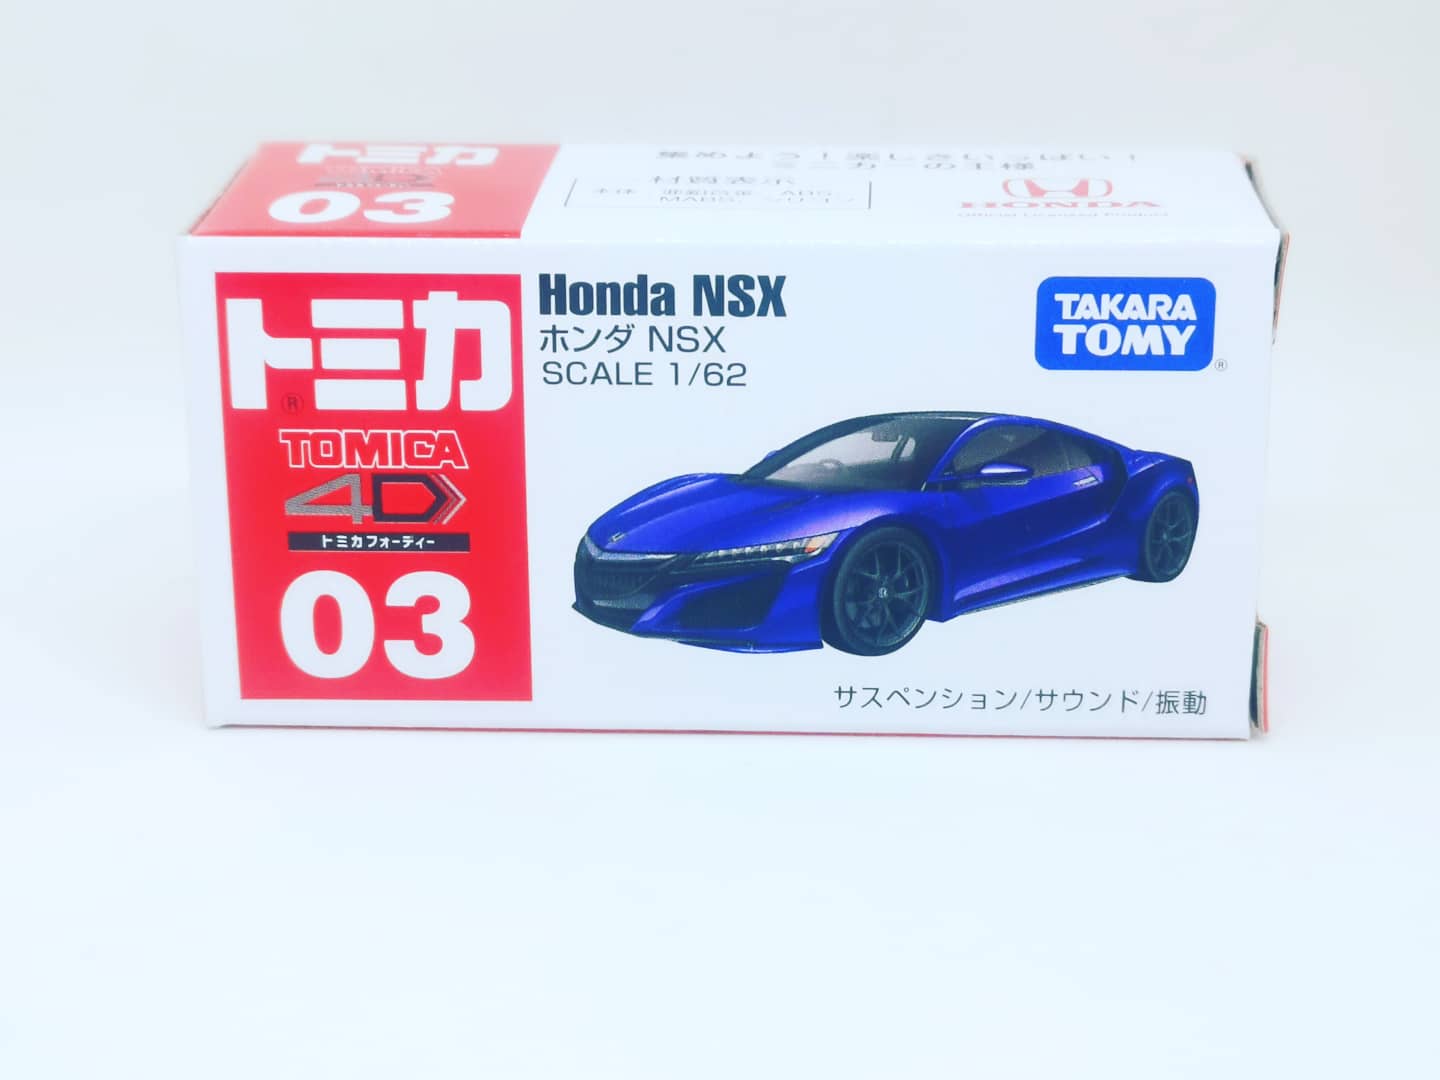 Light & Sound Tomica 4D
Honda New NSX ACURA Blue